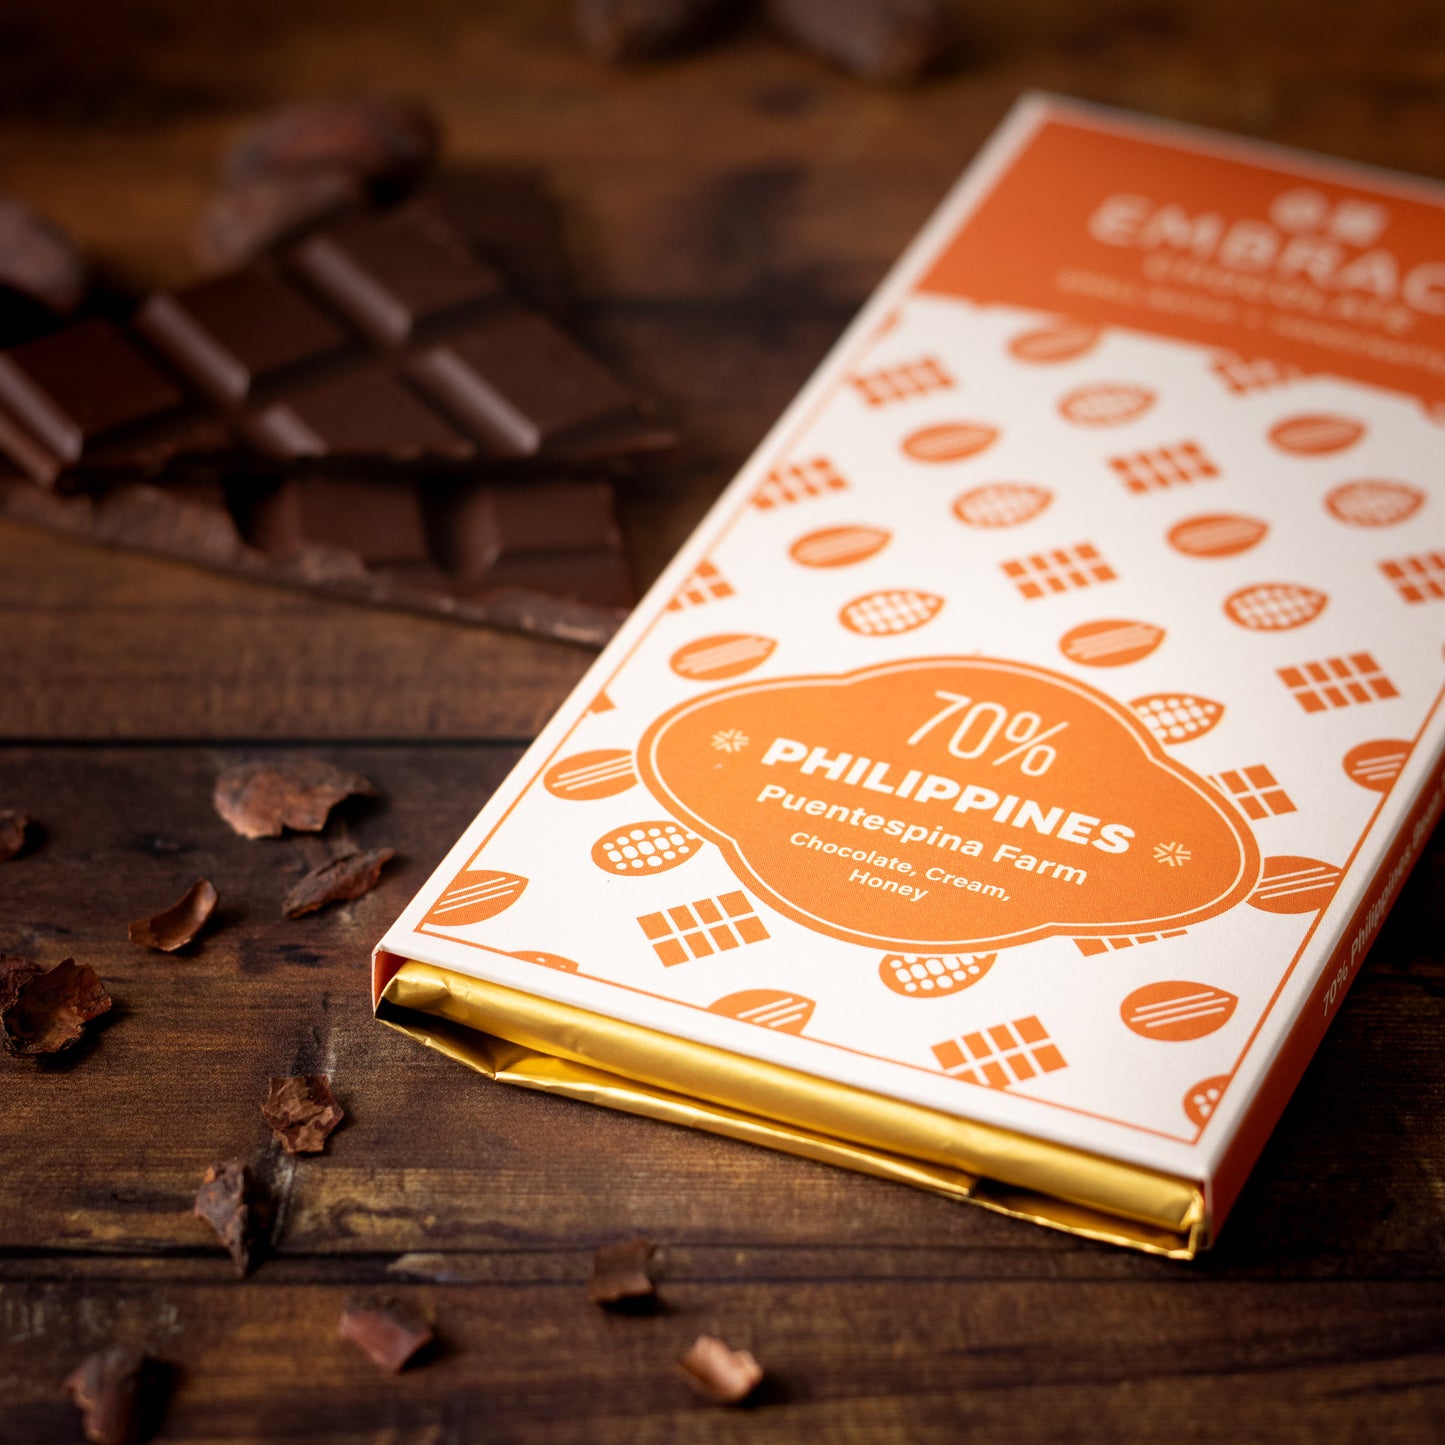 Embrace Chocolate - 70%, Philippines | Puentespina Farm